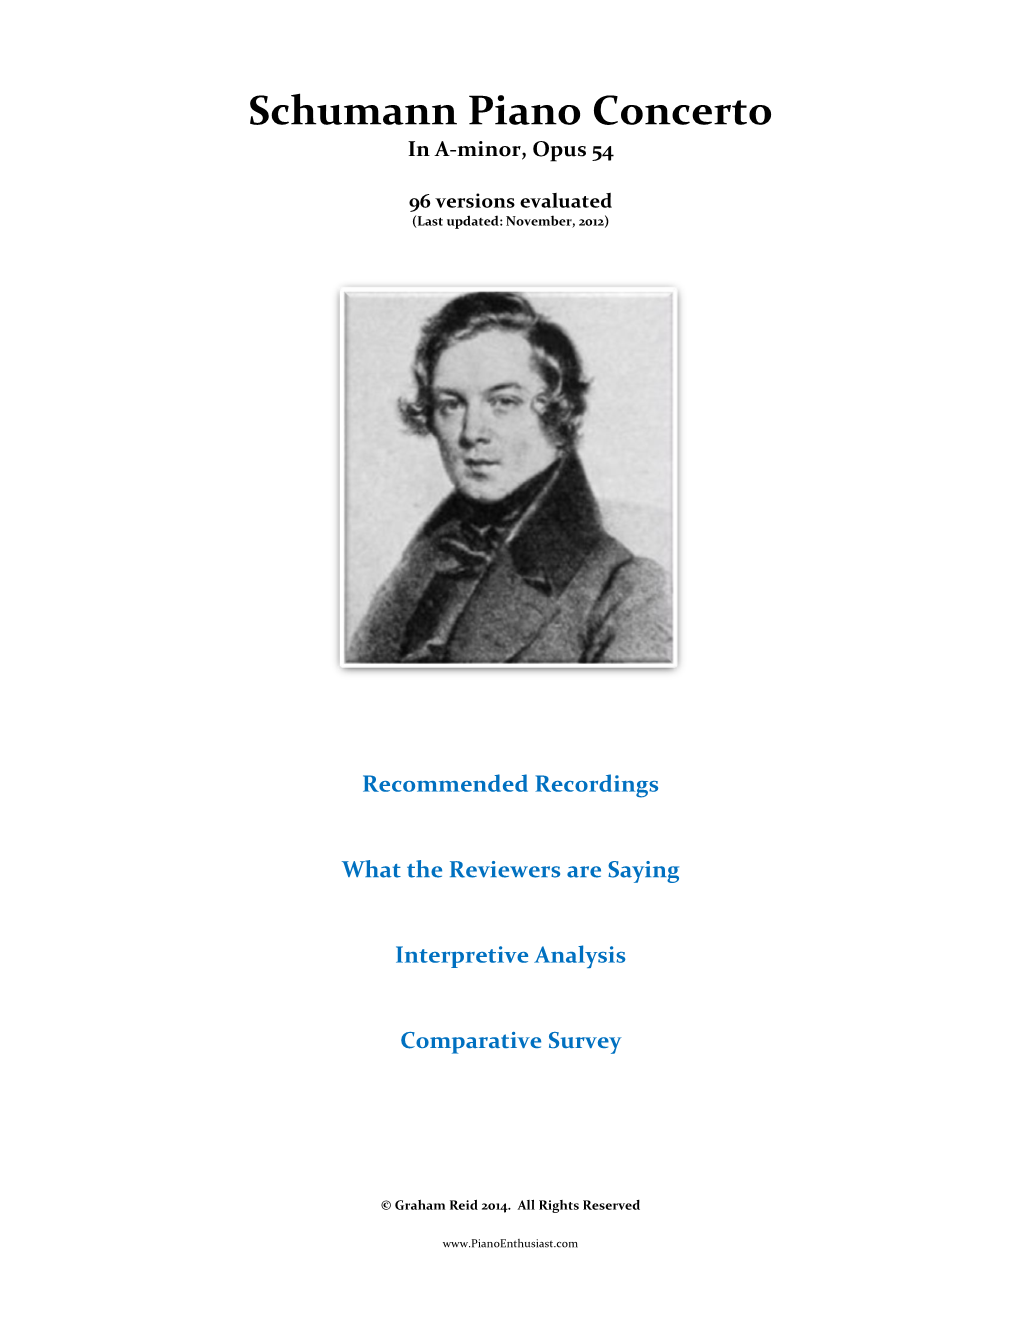 Schumann Piano Concerto in A-Minor, Opus 54